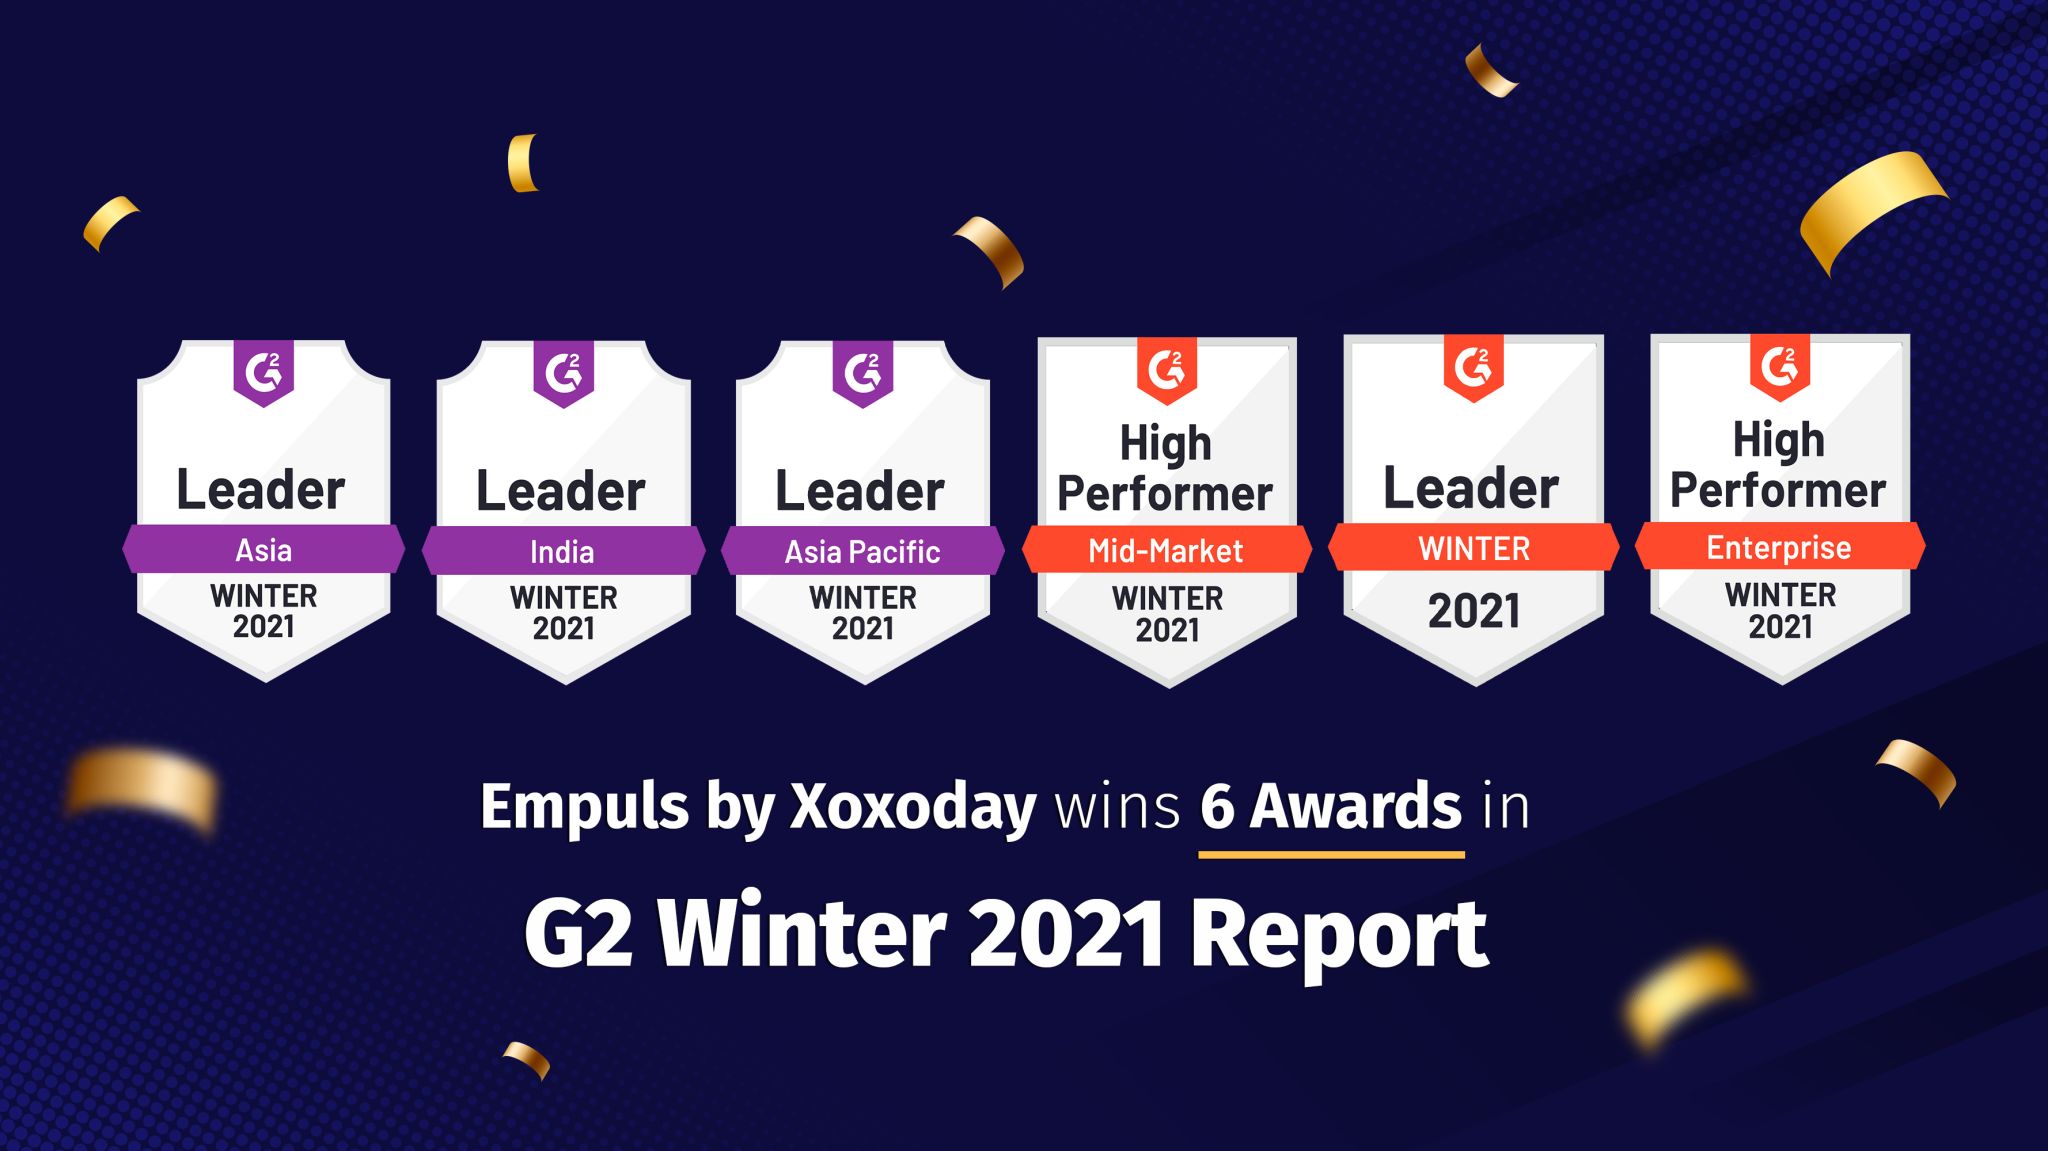 Empuls eins 6 awards in G2 winter 2021 report